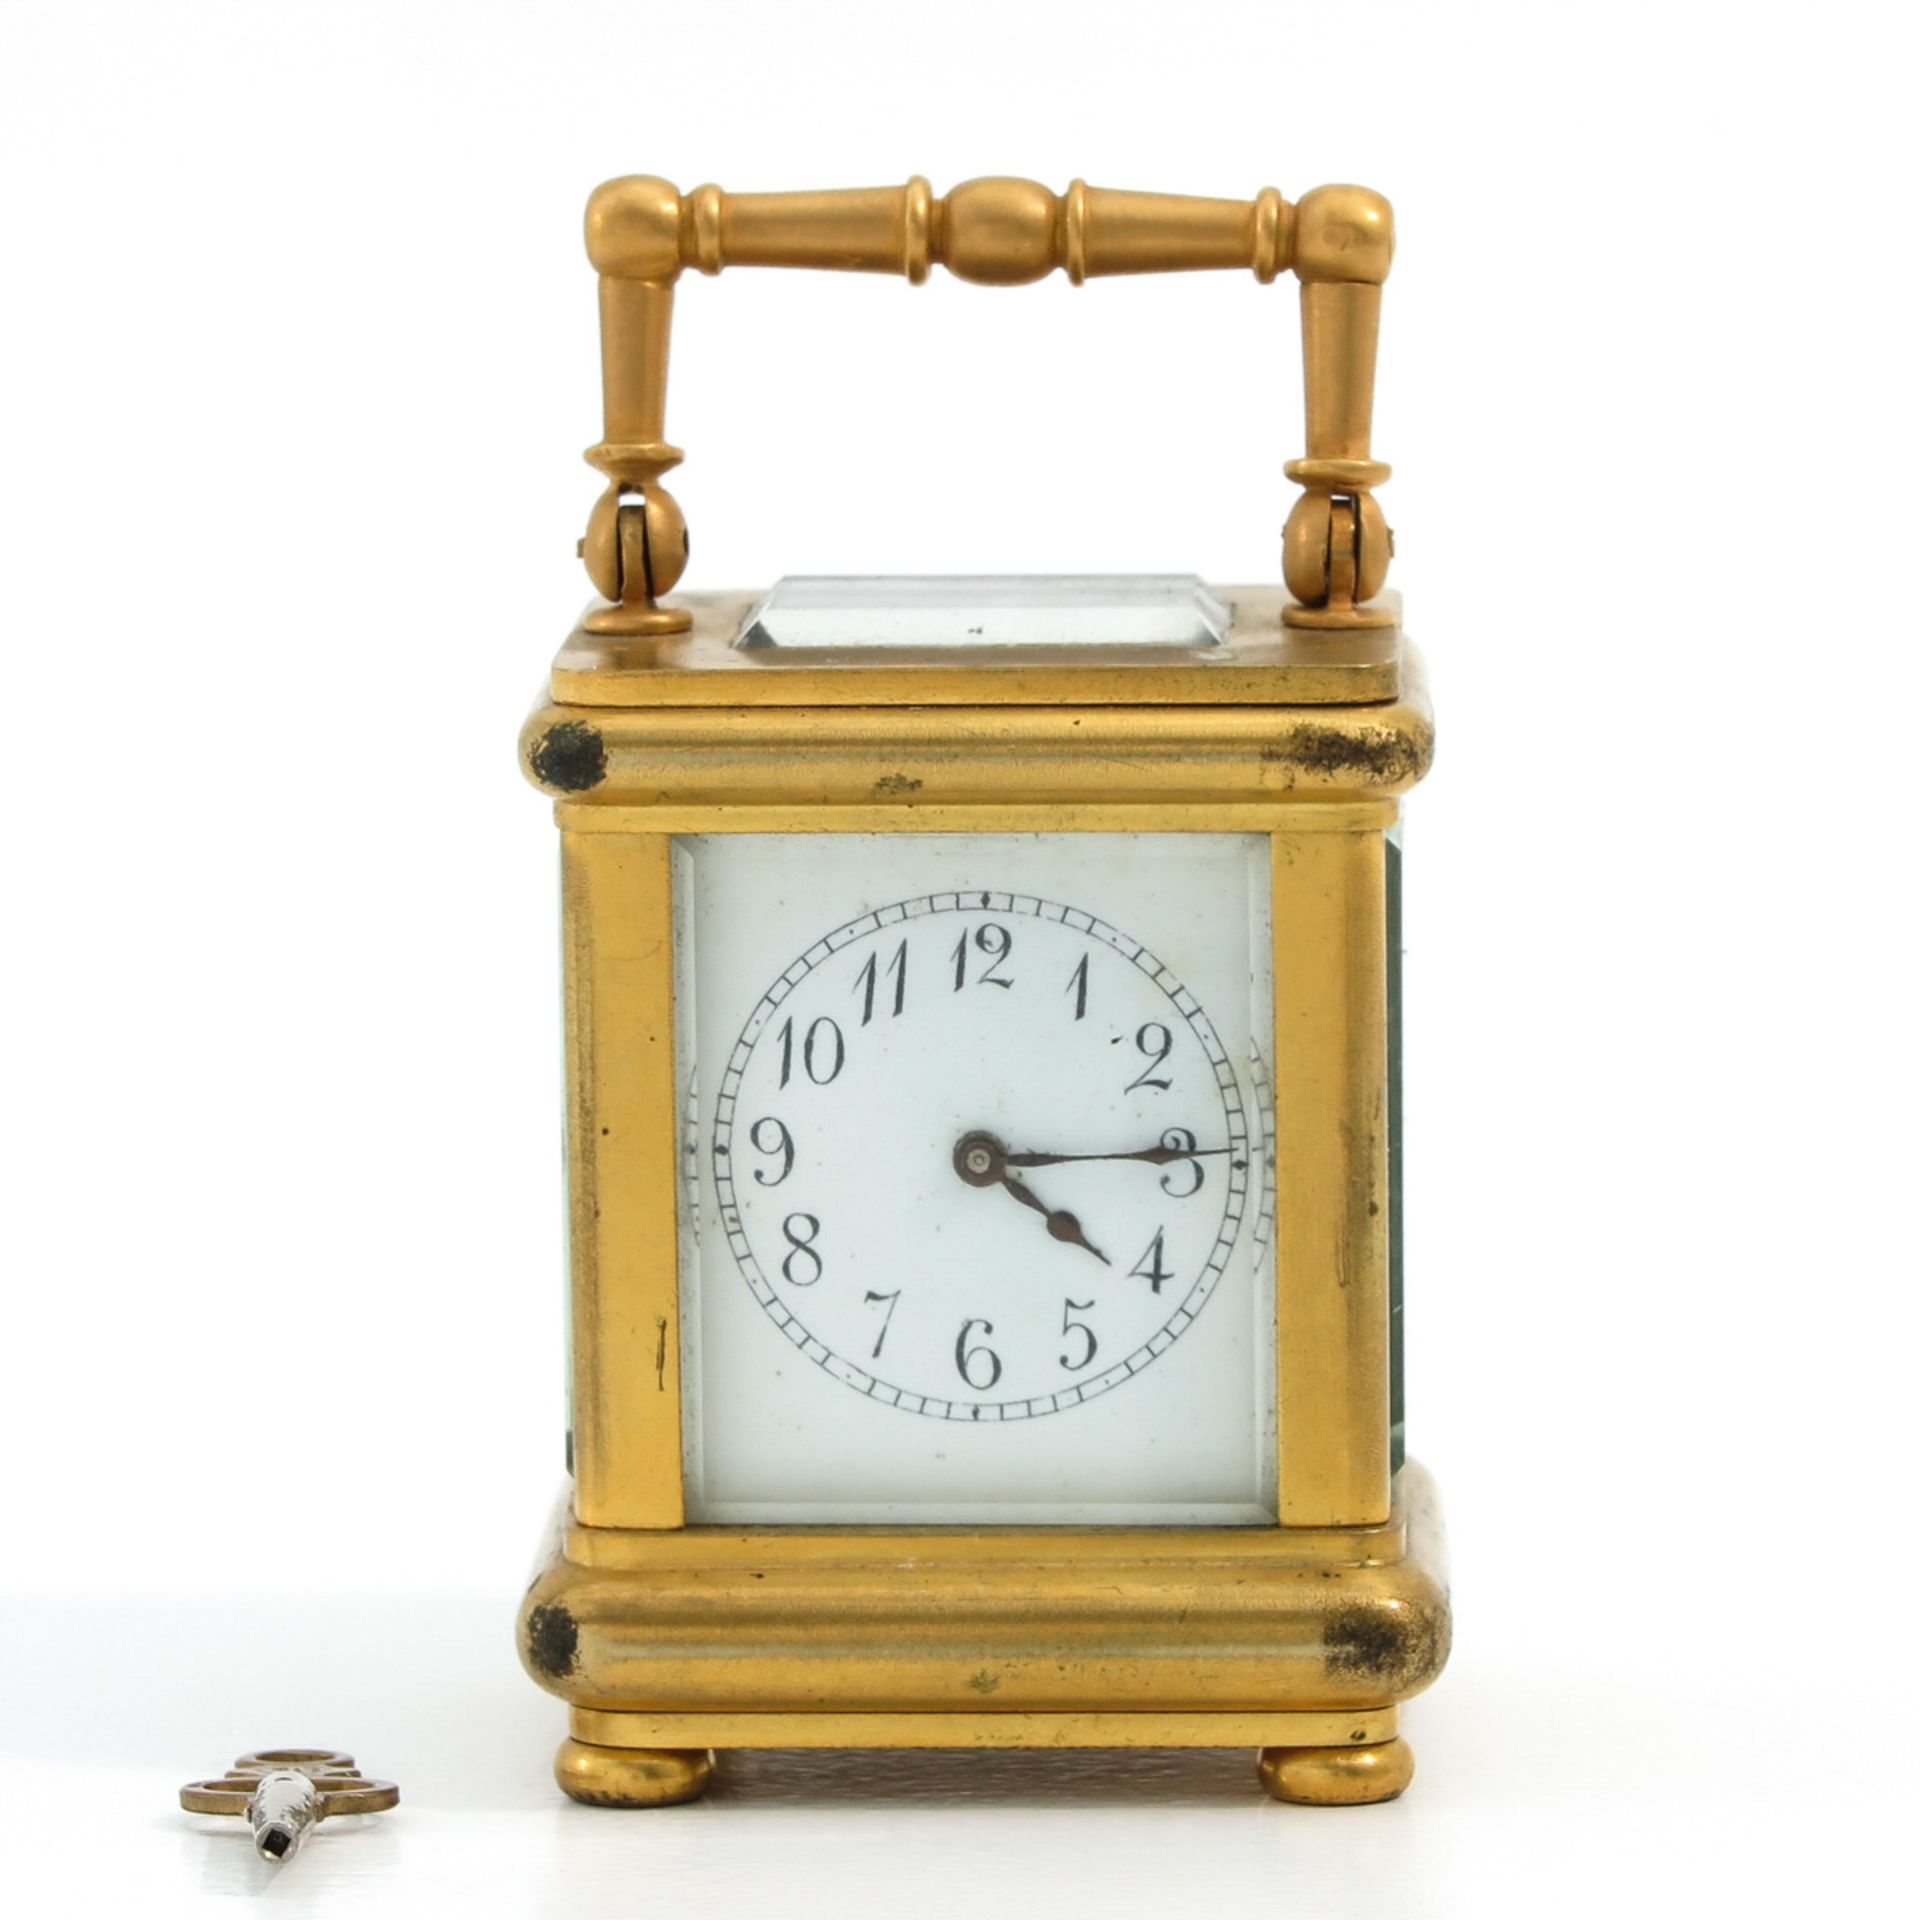 A Le Roy & Fils Carriage Clock